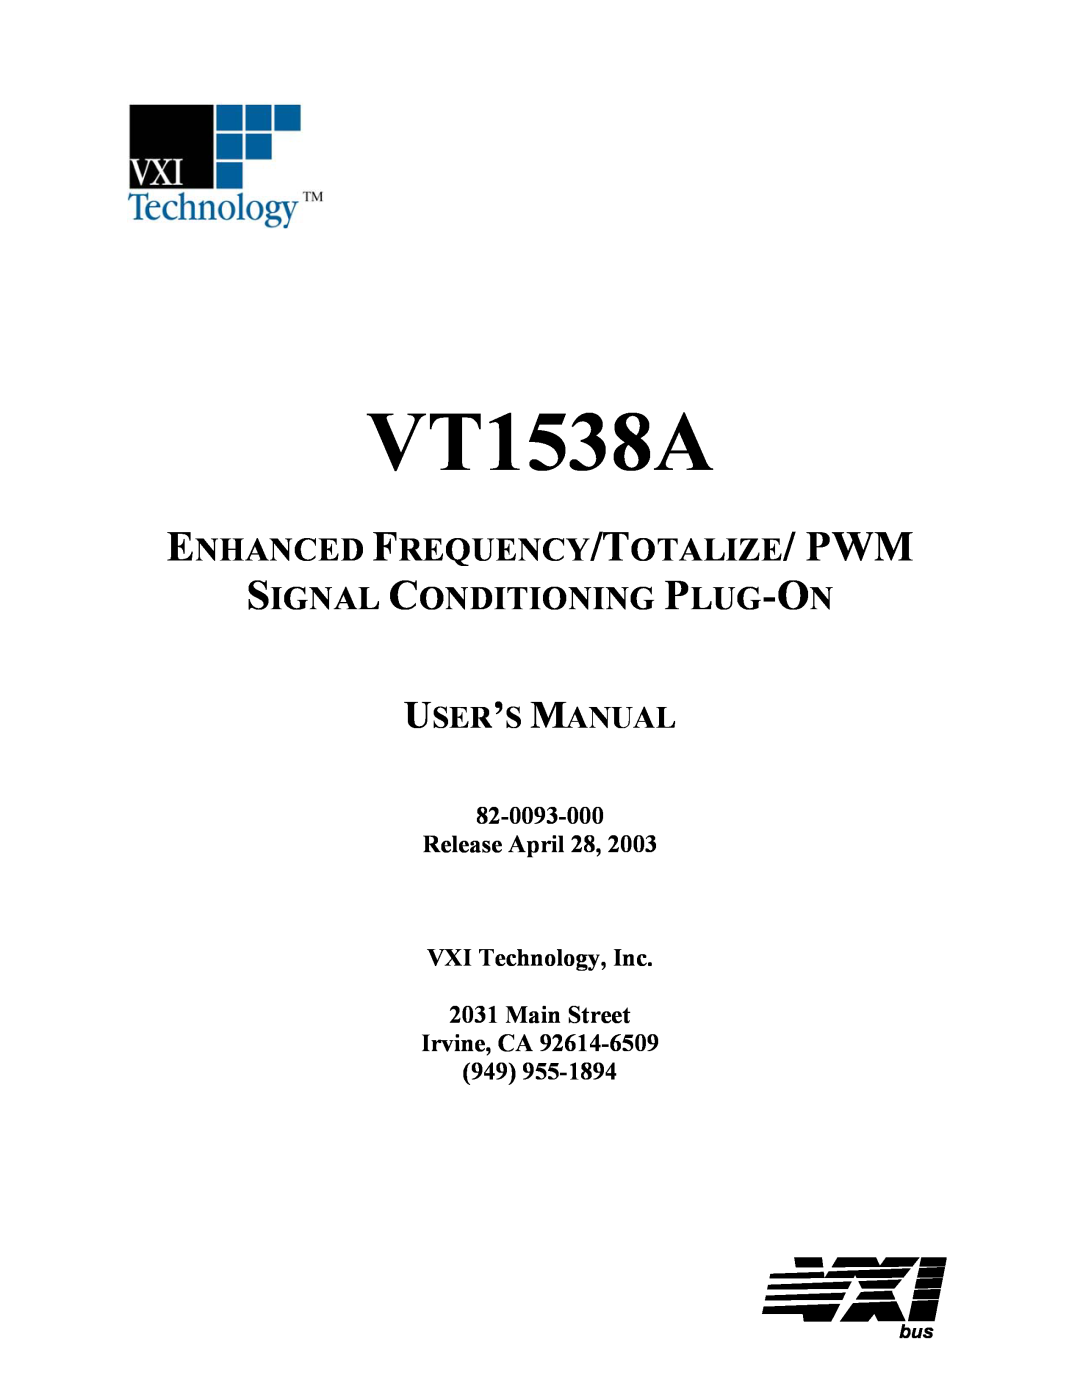 VXI VT1538A user manual Release April 28 VXI Technology, Inc 2031 Main Street, Irvine, CA 949, User’S Manual 